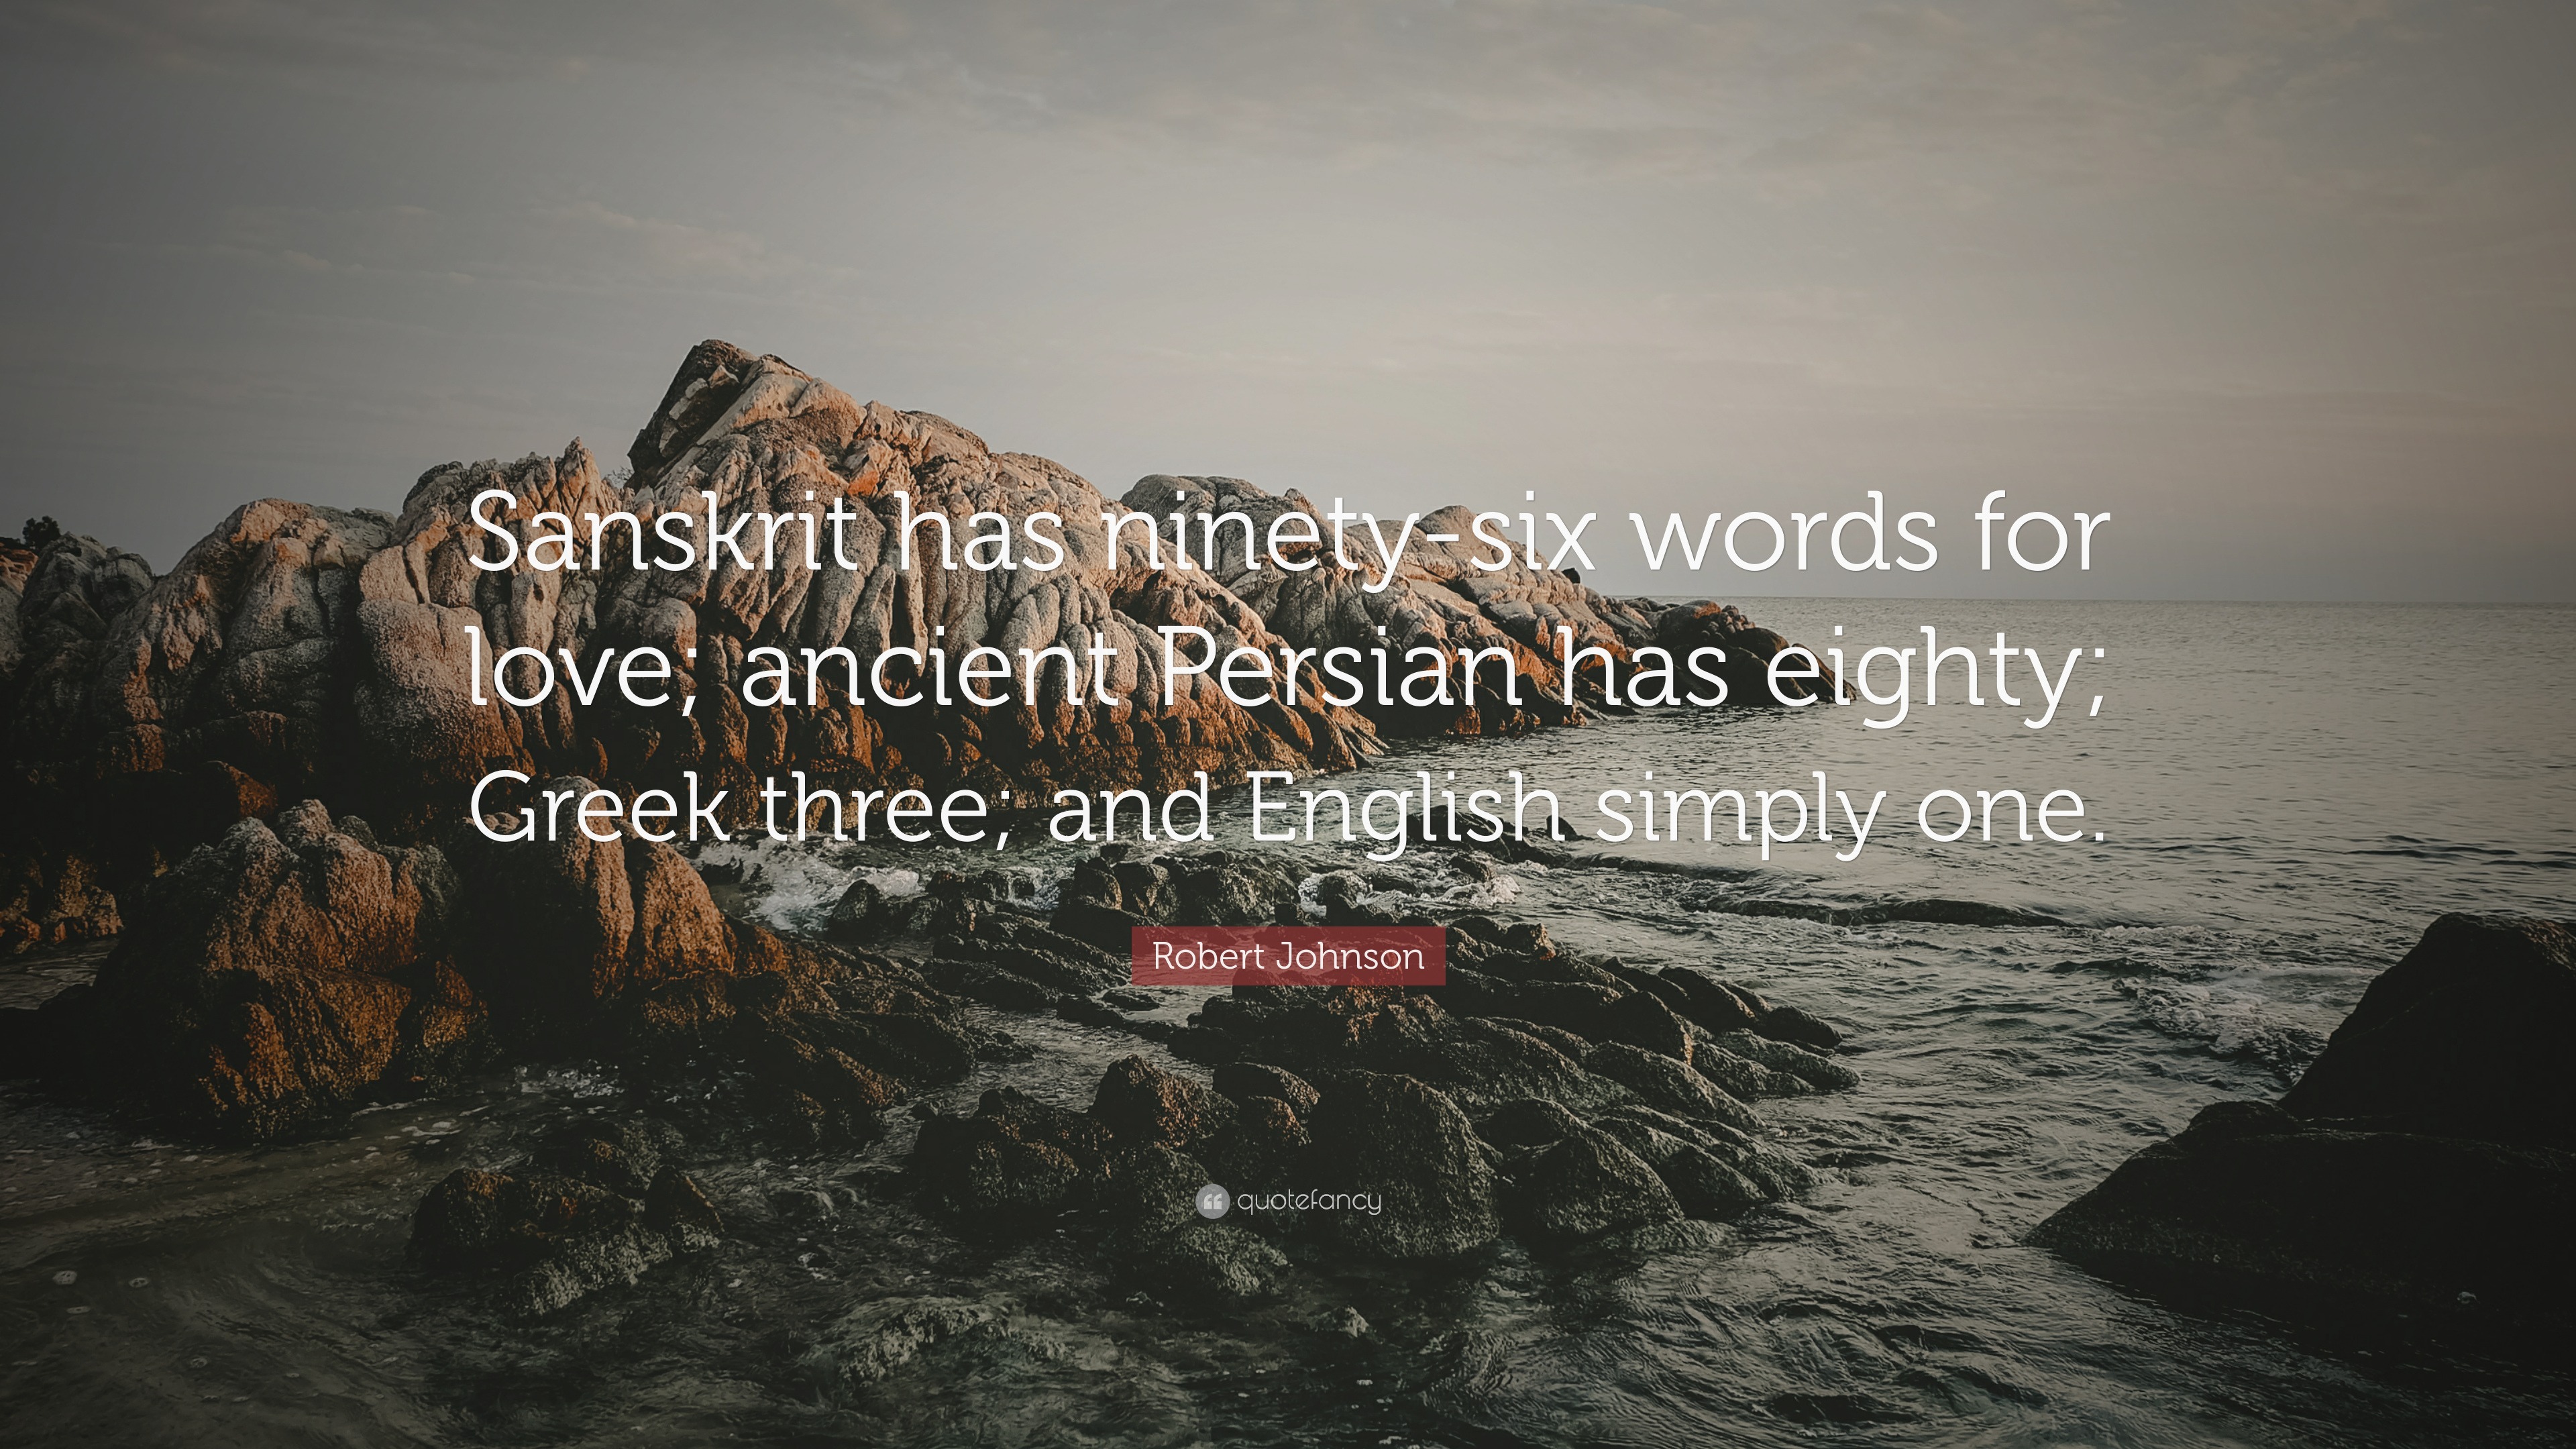 Robert Johnson Quote: “Sanskrit has ninety-six words for love; ancient  Persian has eighty; Greek three;